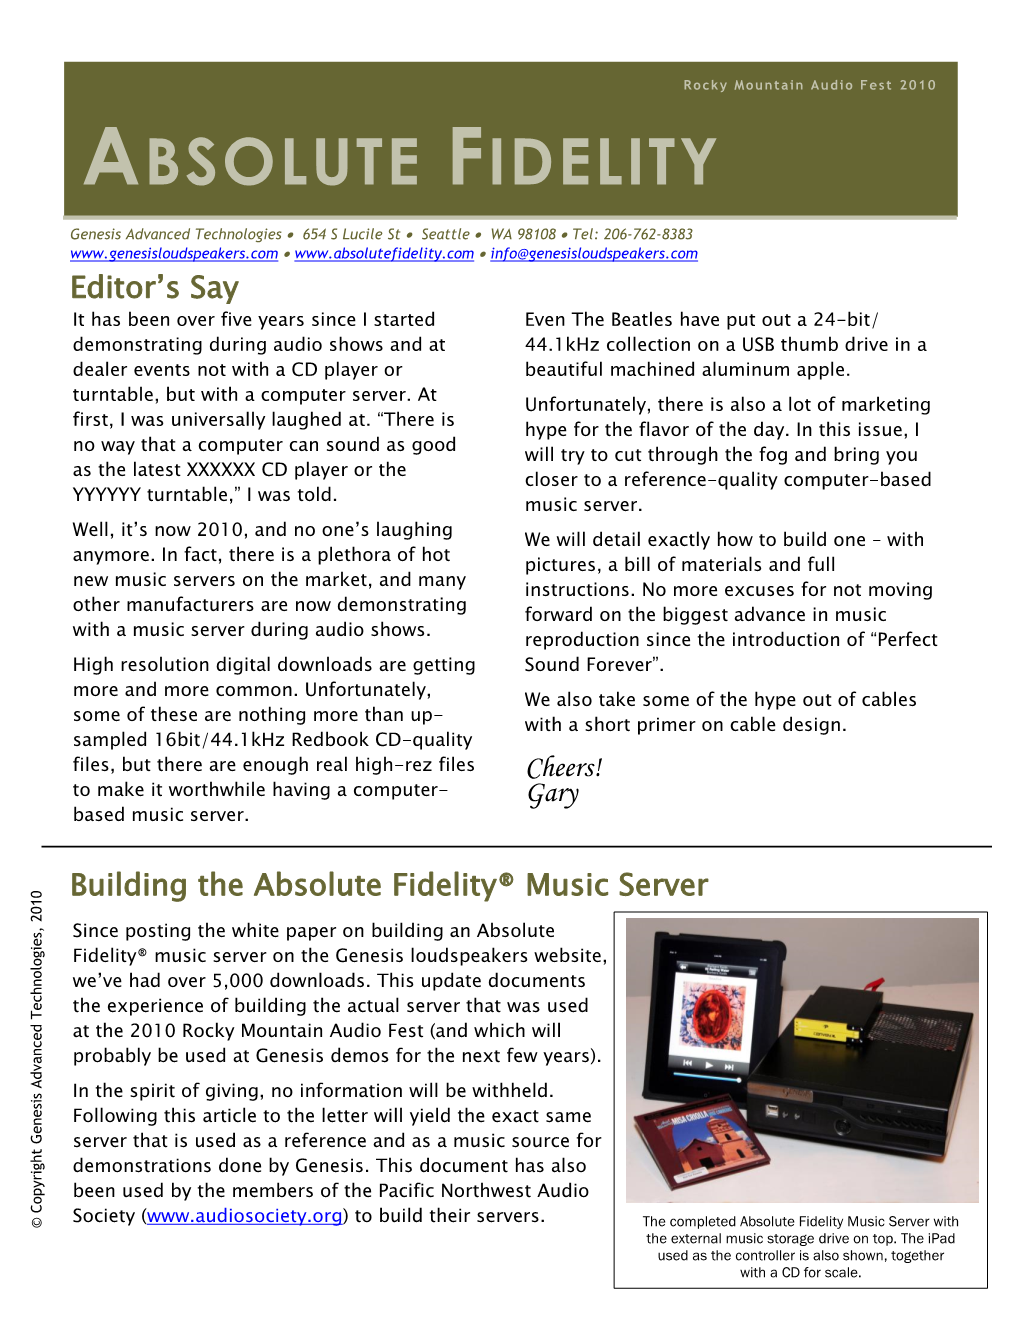 Absolute Fidelity, RMAF 2010 Edition